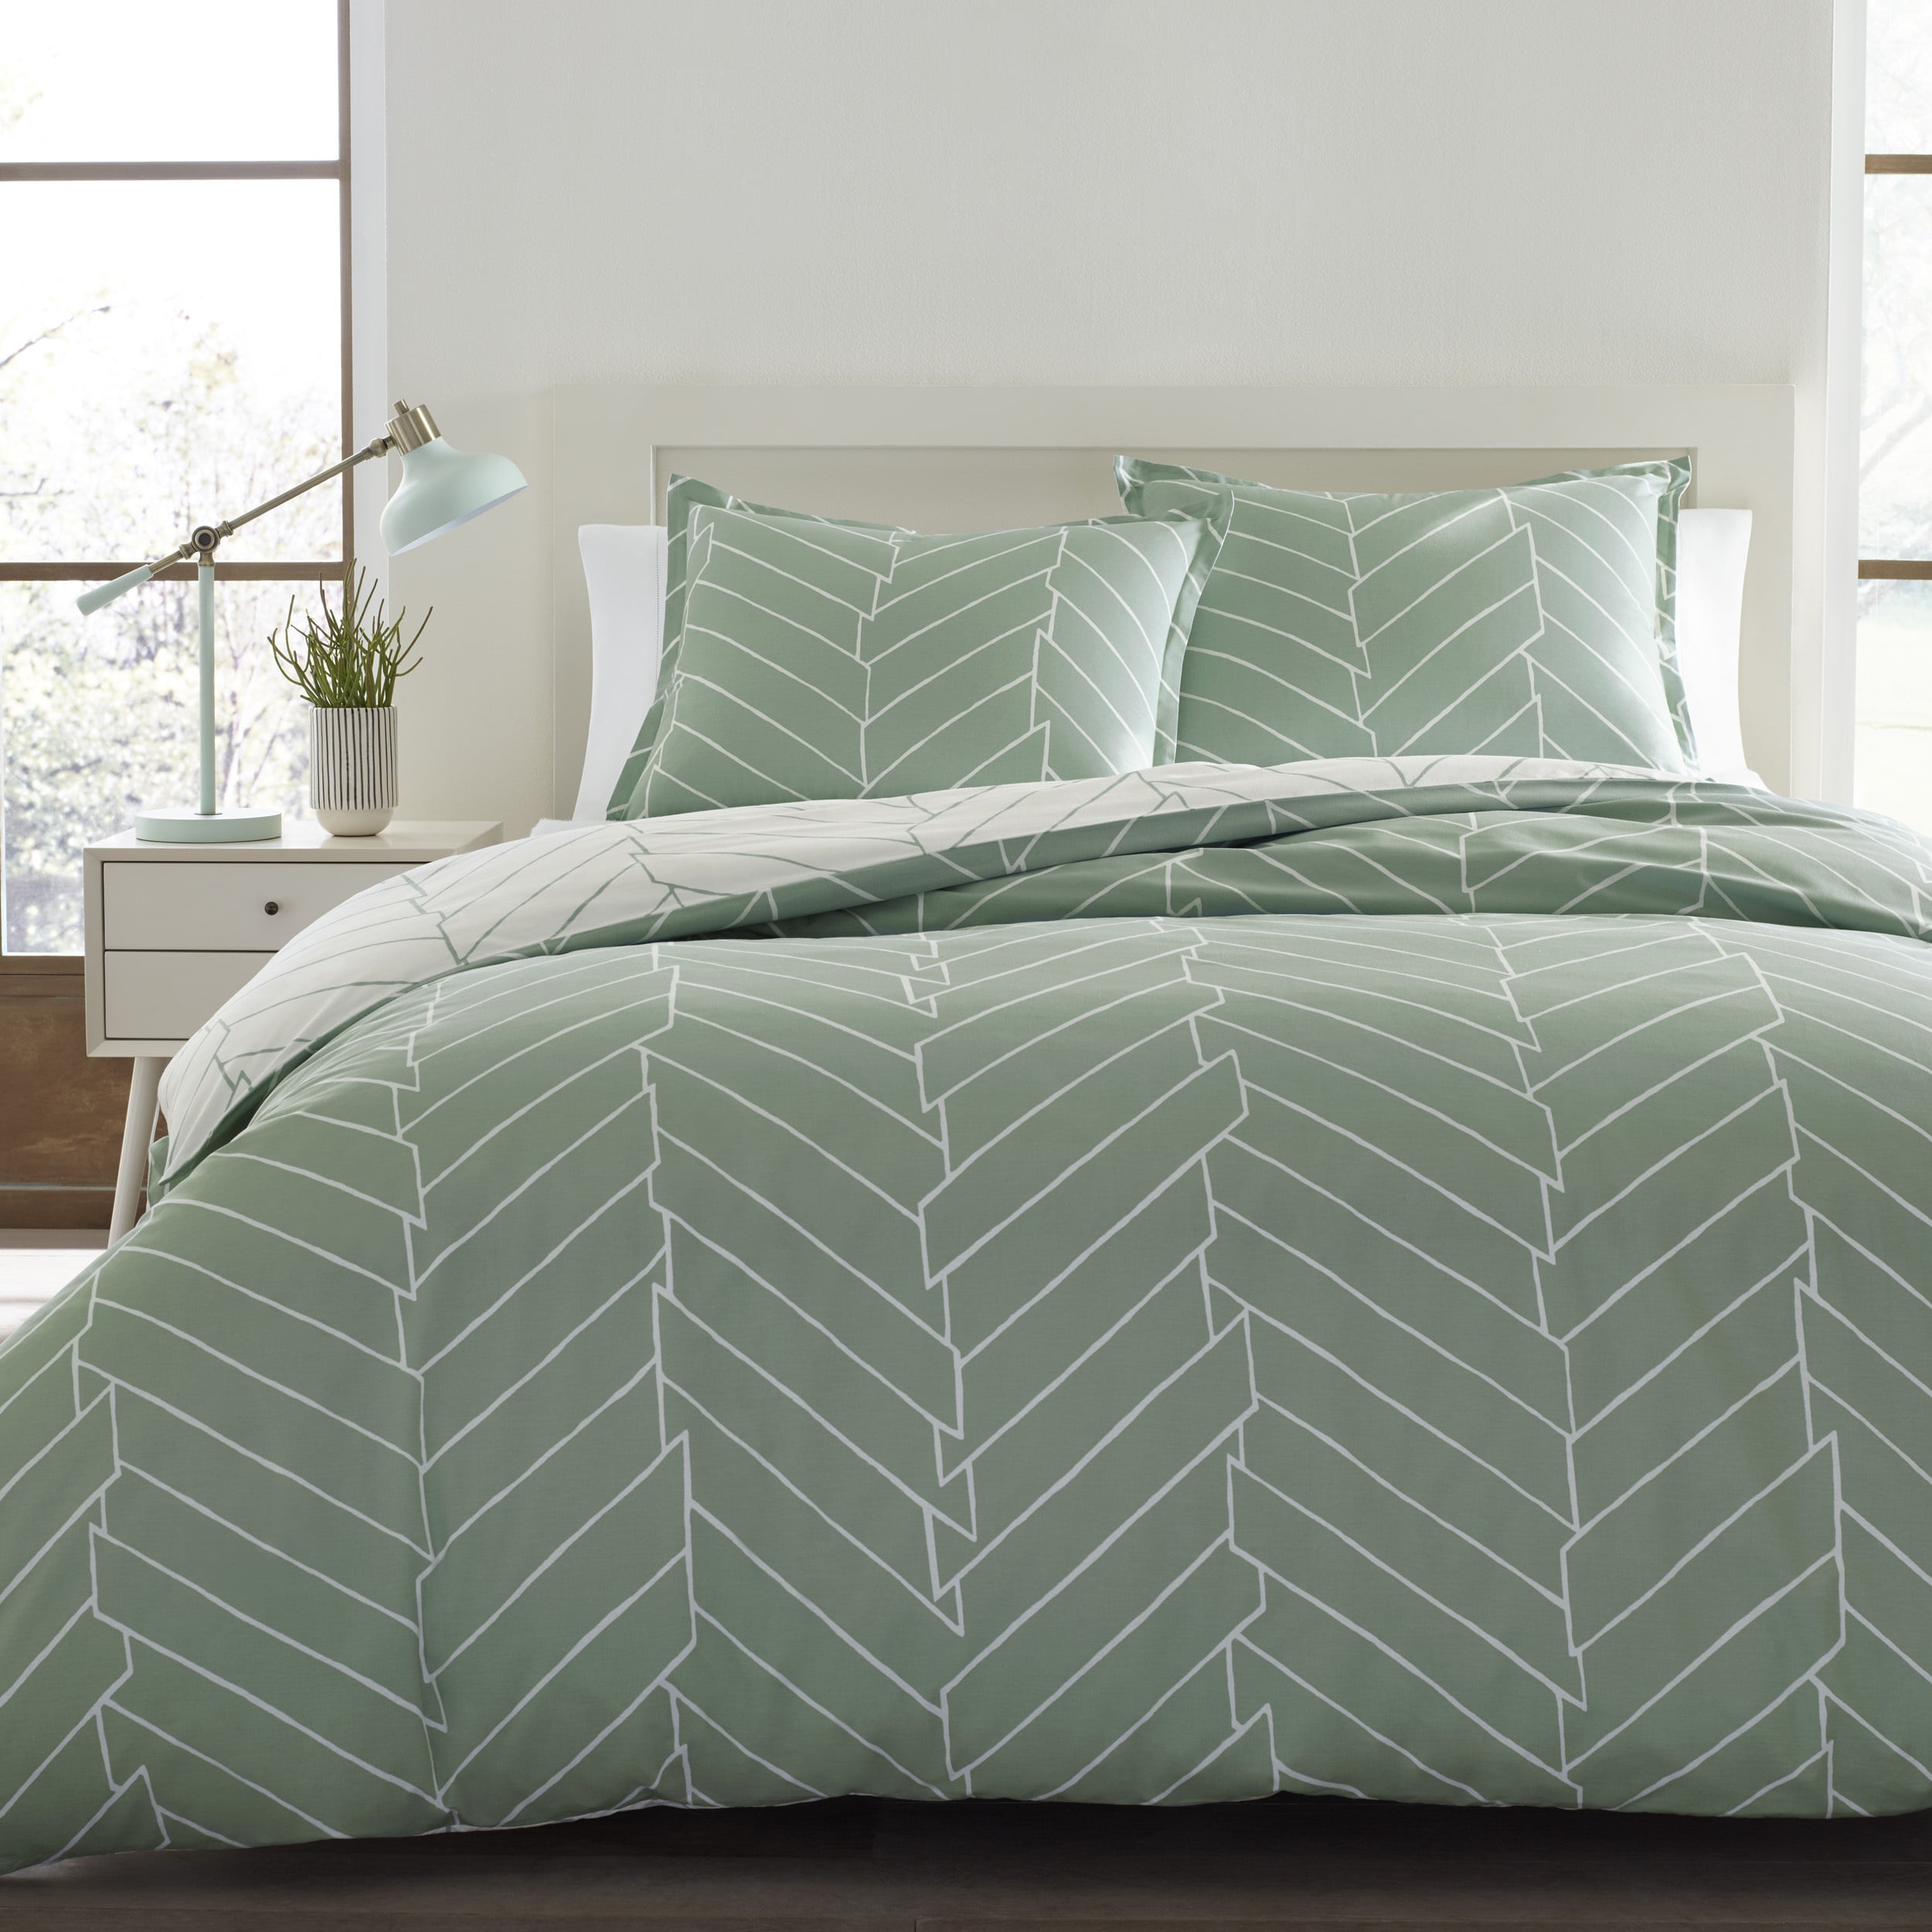 green comforter sets australia